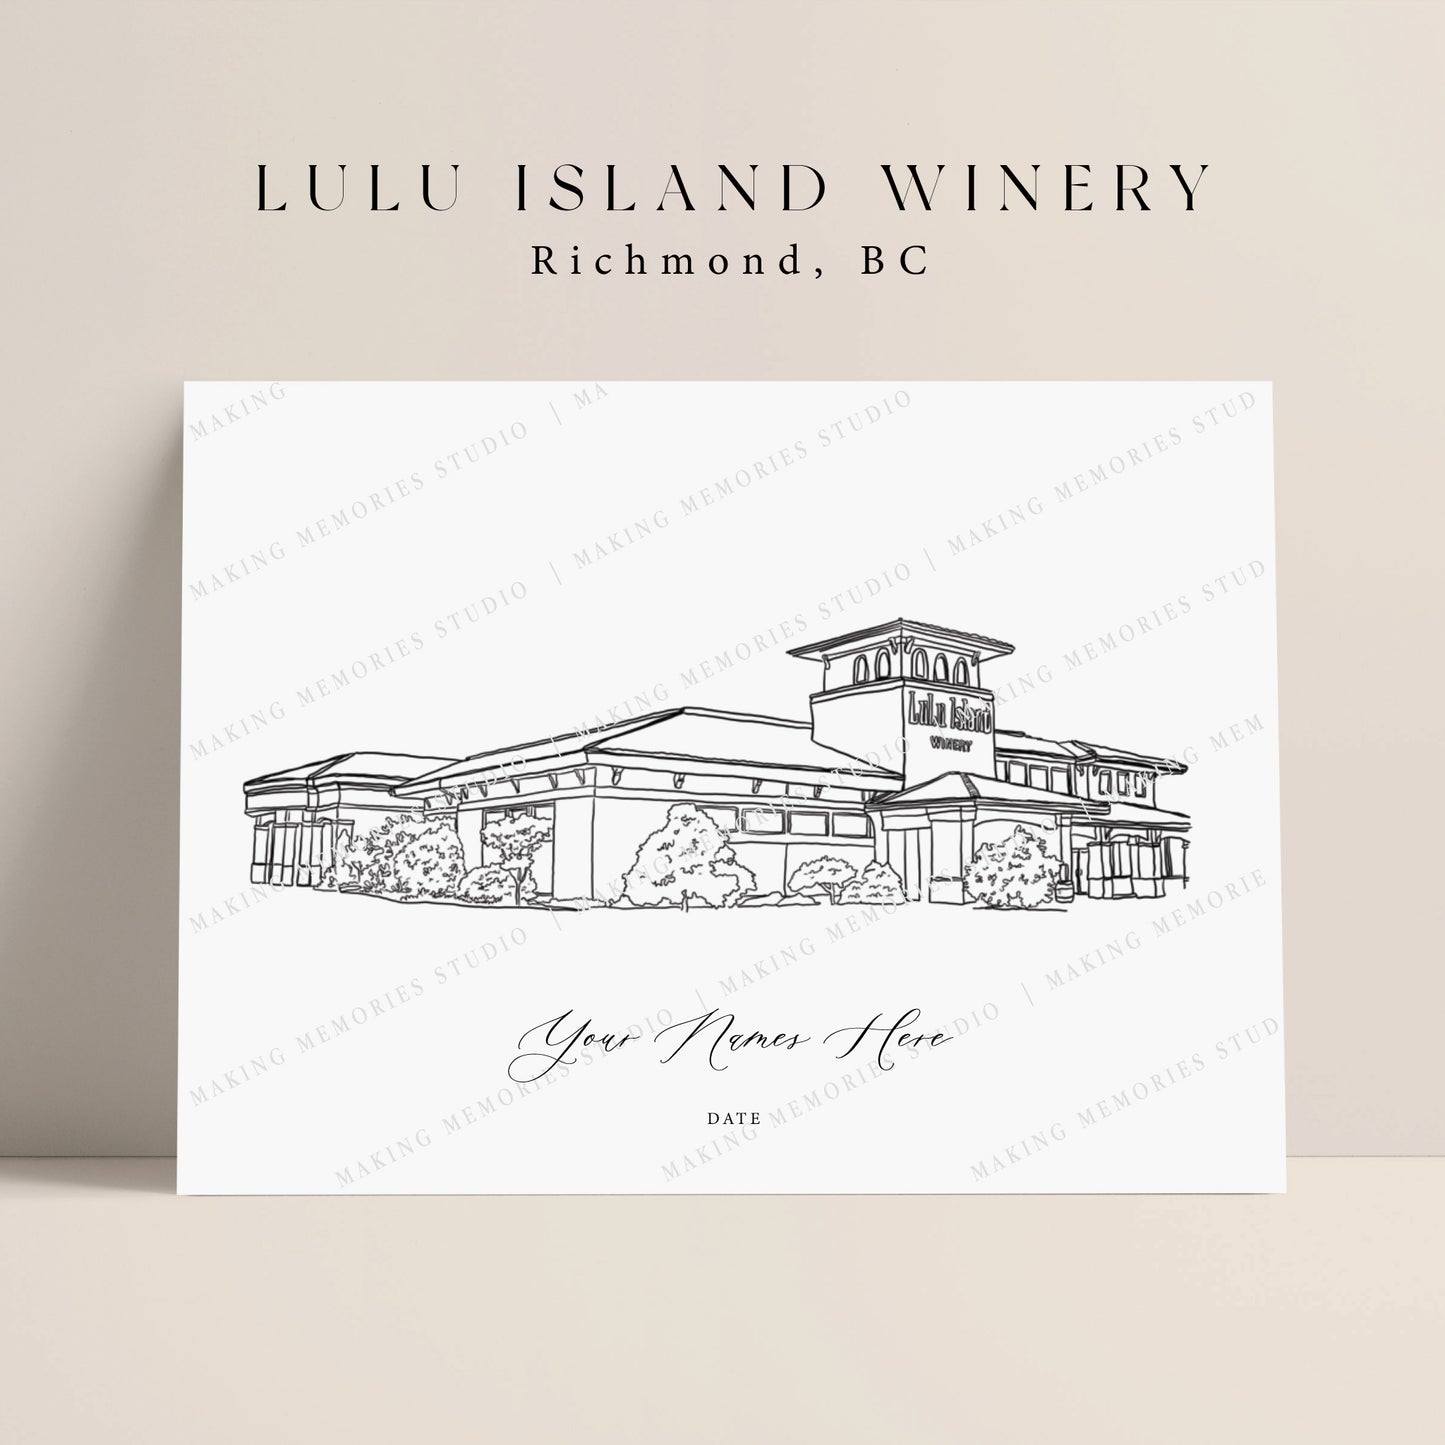 Lulu Island Winery